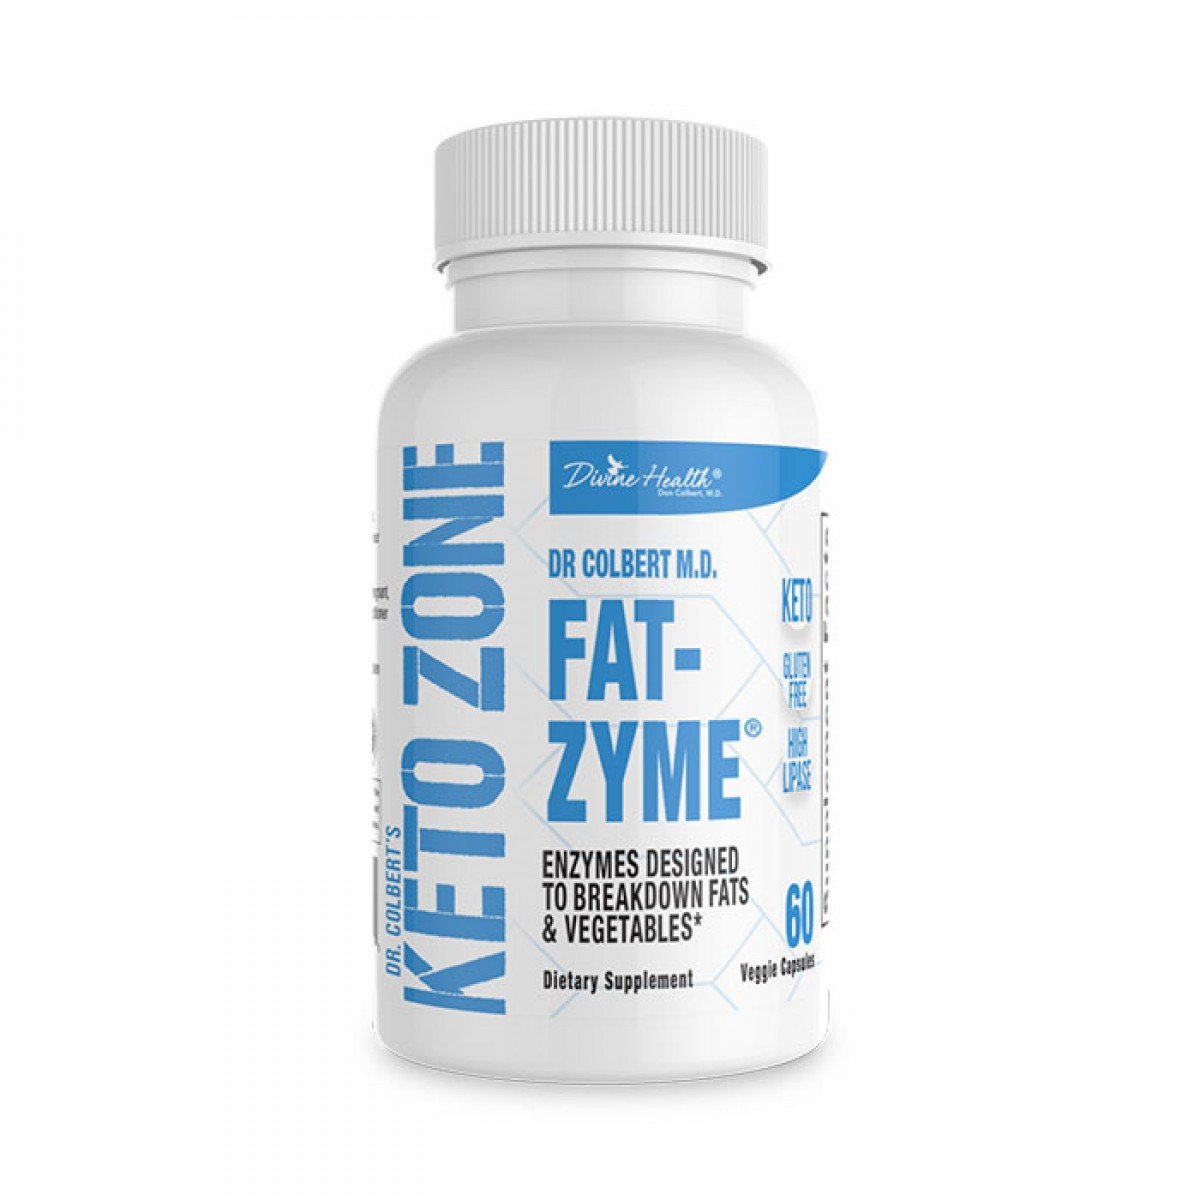 Keto Zone Diet
 Keto Zone Fat Zyme An Enyzme Designed for the Keto Zone